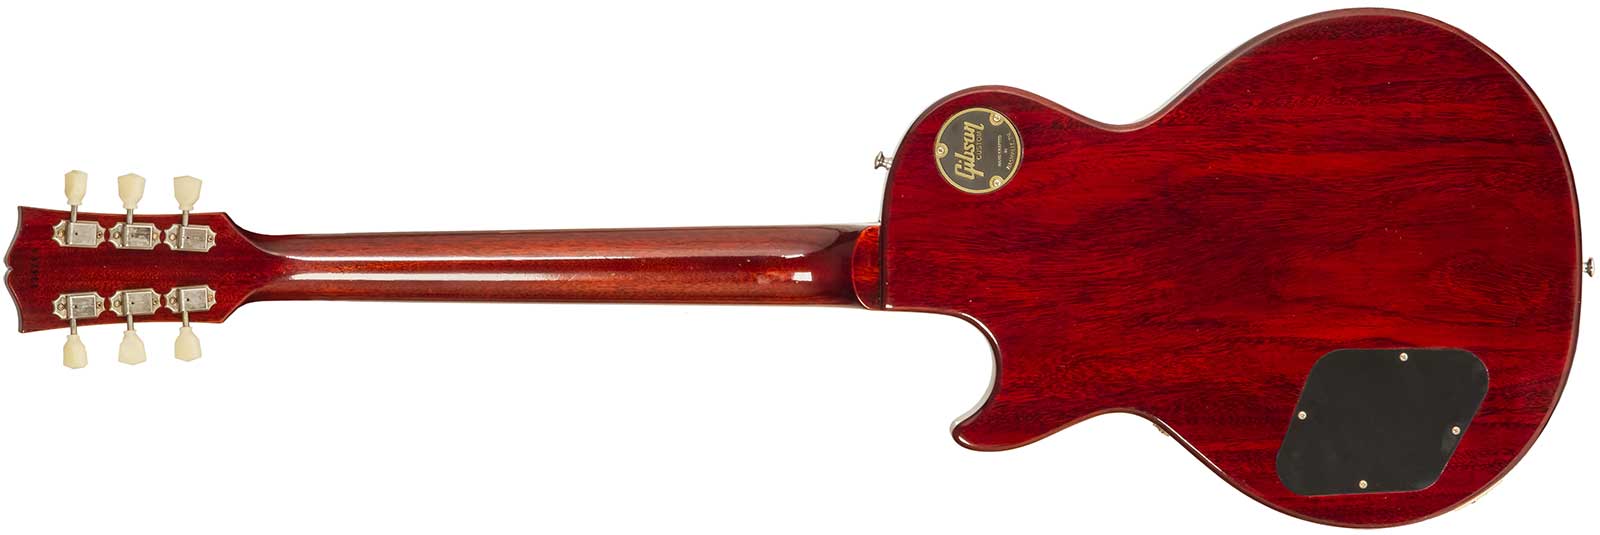 Gibson Custom Shop M2m Les Paul Standard 1959 Reissue 2h Ht Rw #934264 - Murphy Lab Ultra Light Aged Factory Burst - Single cut electric guitar - Vari